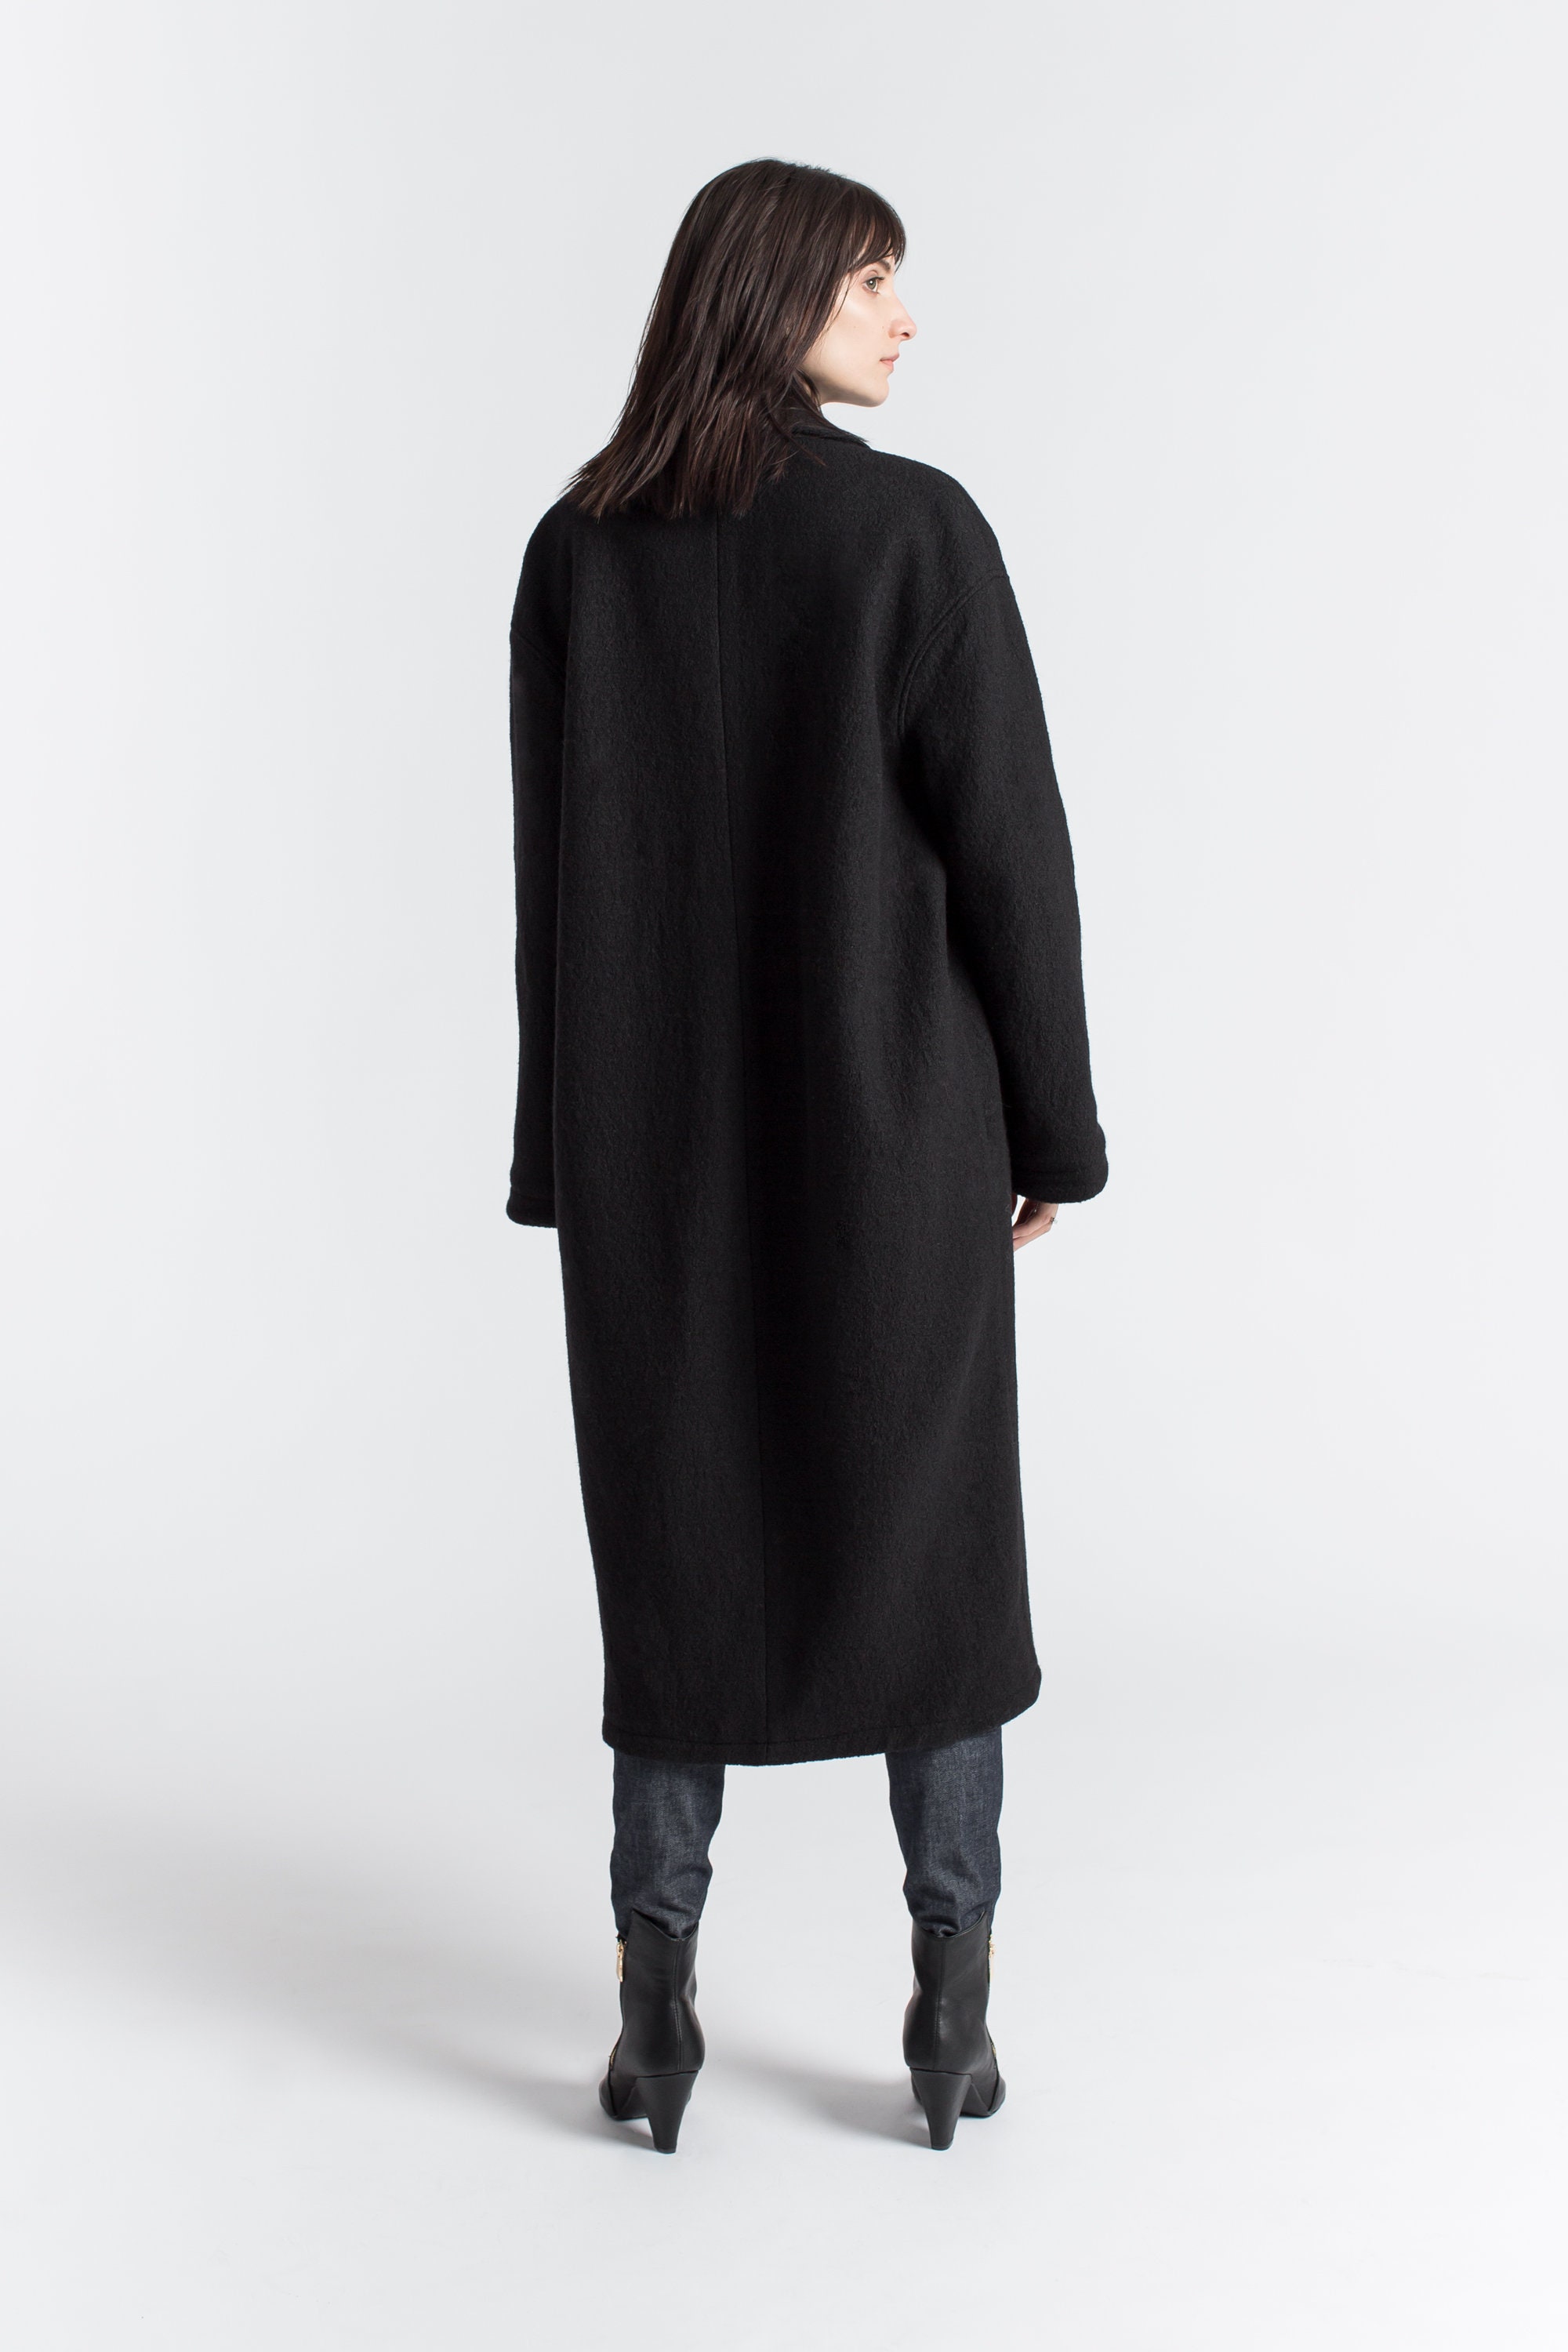 Long Black Wool Coat, Elegant Wool Jacket, Collared Coat, Warm Winter Coat,  Long Black Coat, Elizabeth Wool Coat, Marcella MC1397 -  Canada